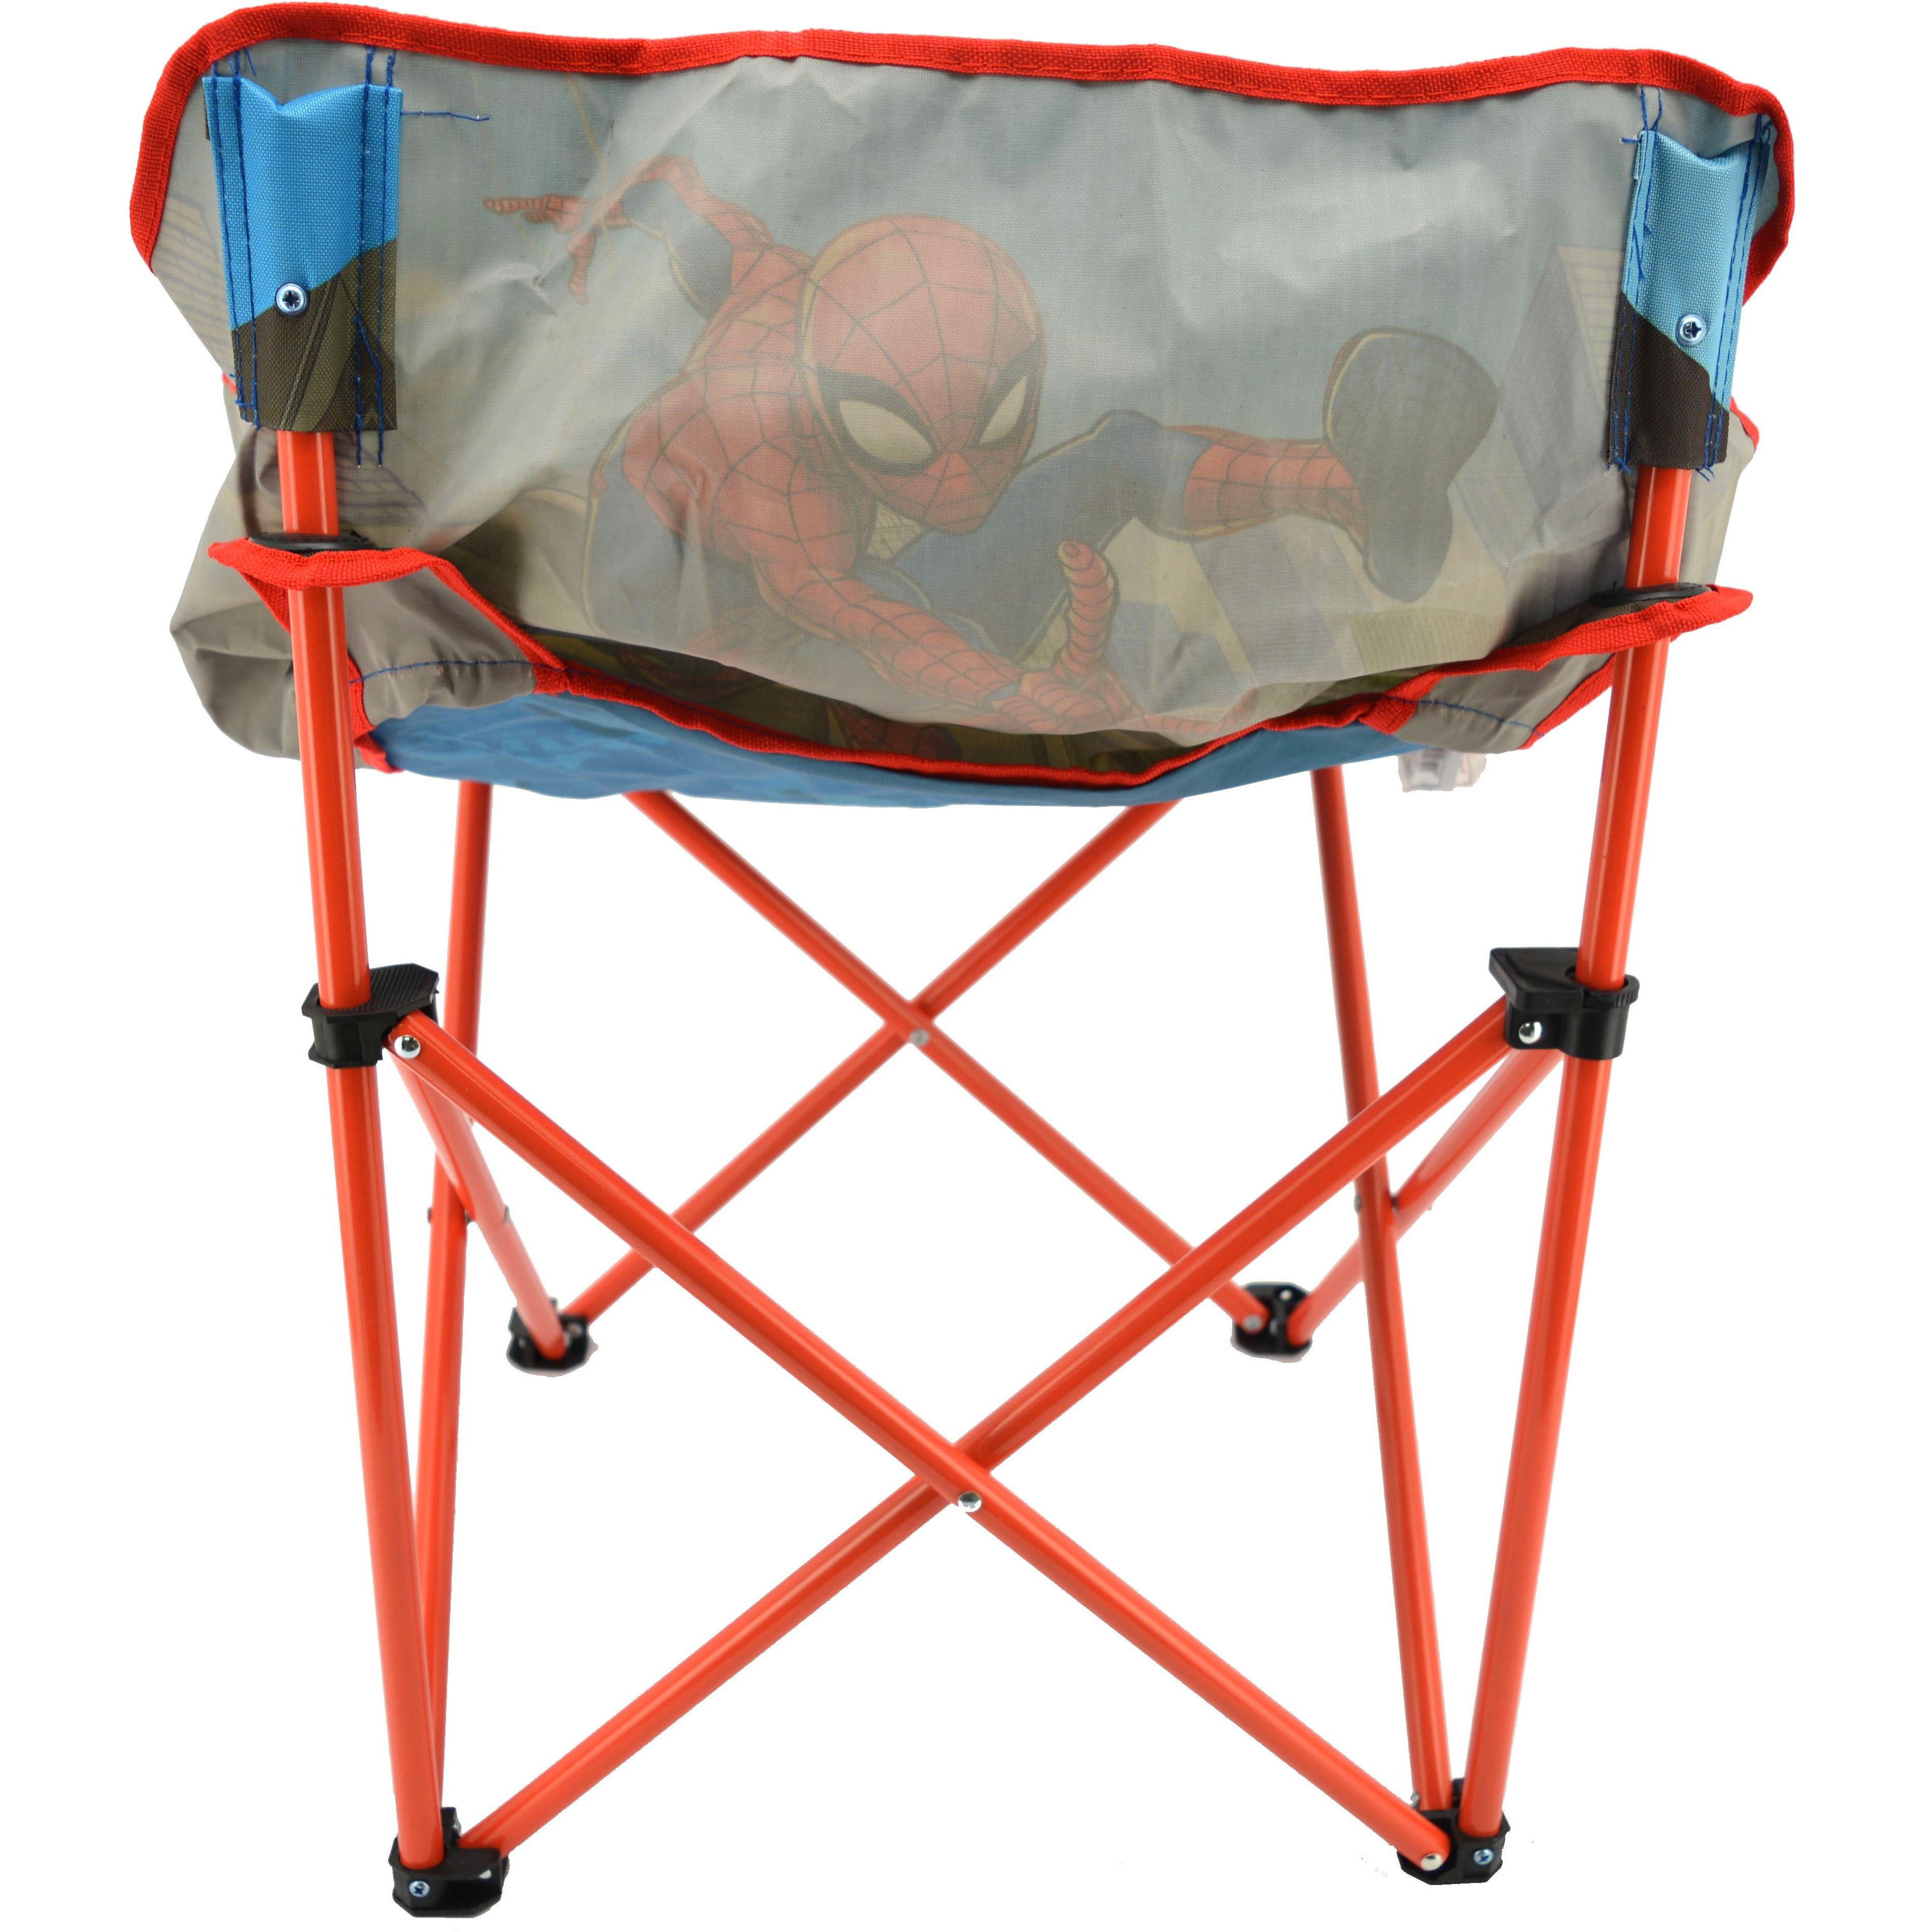 Spiderman Folding chair